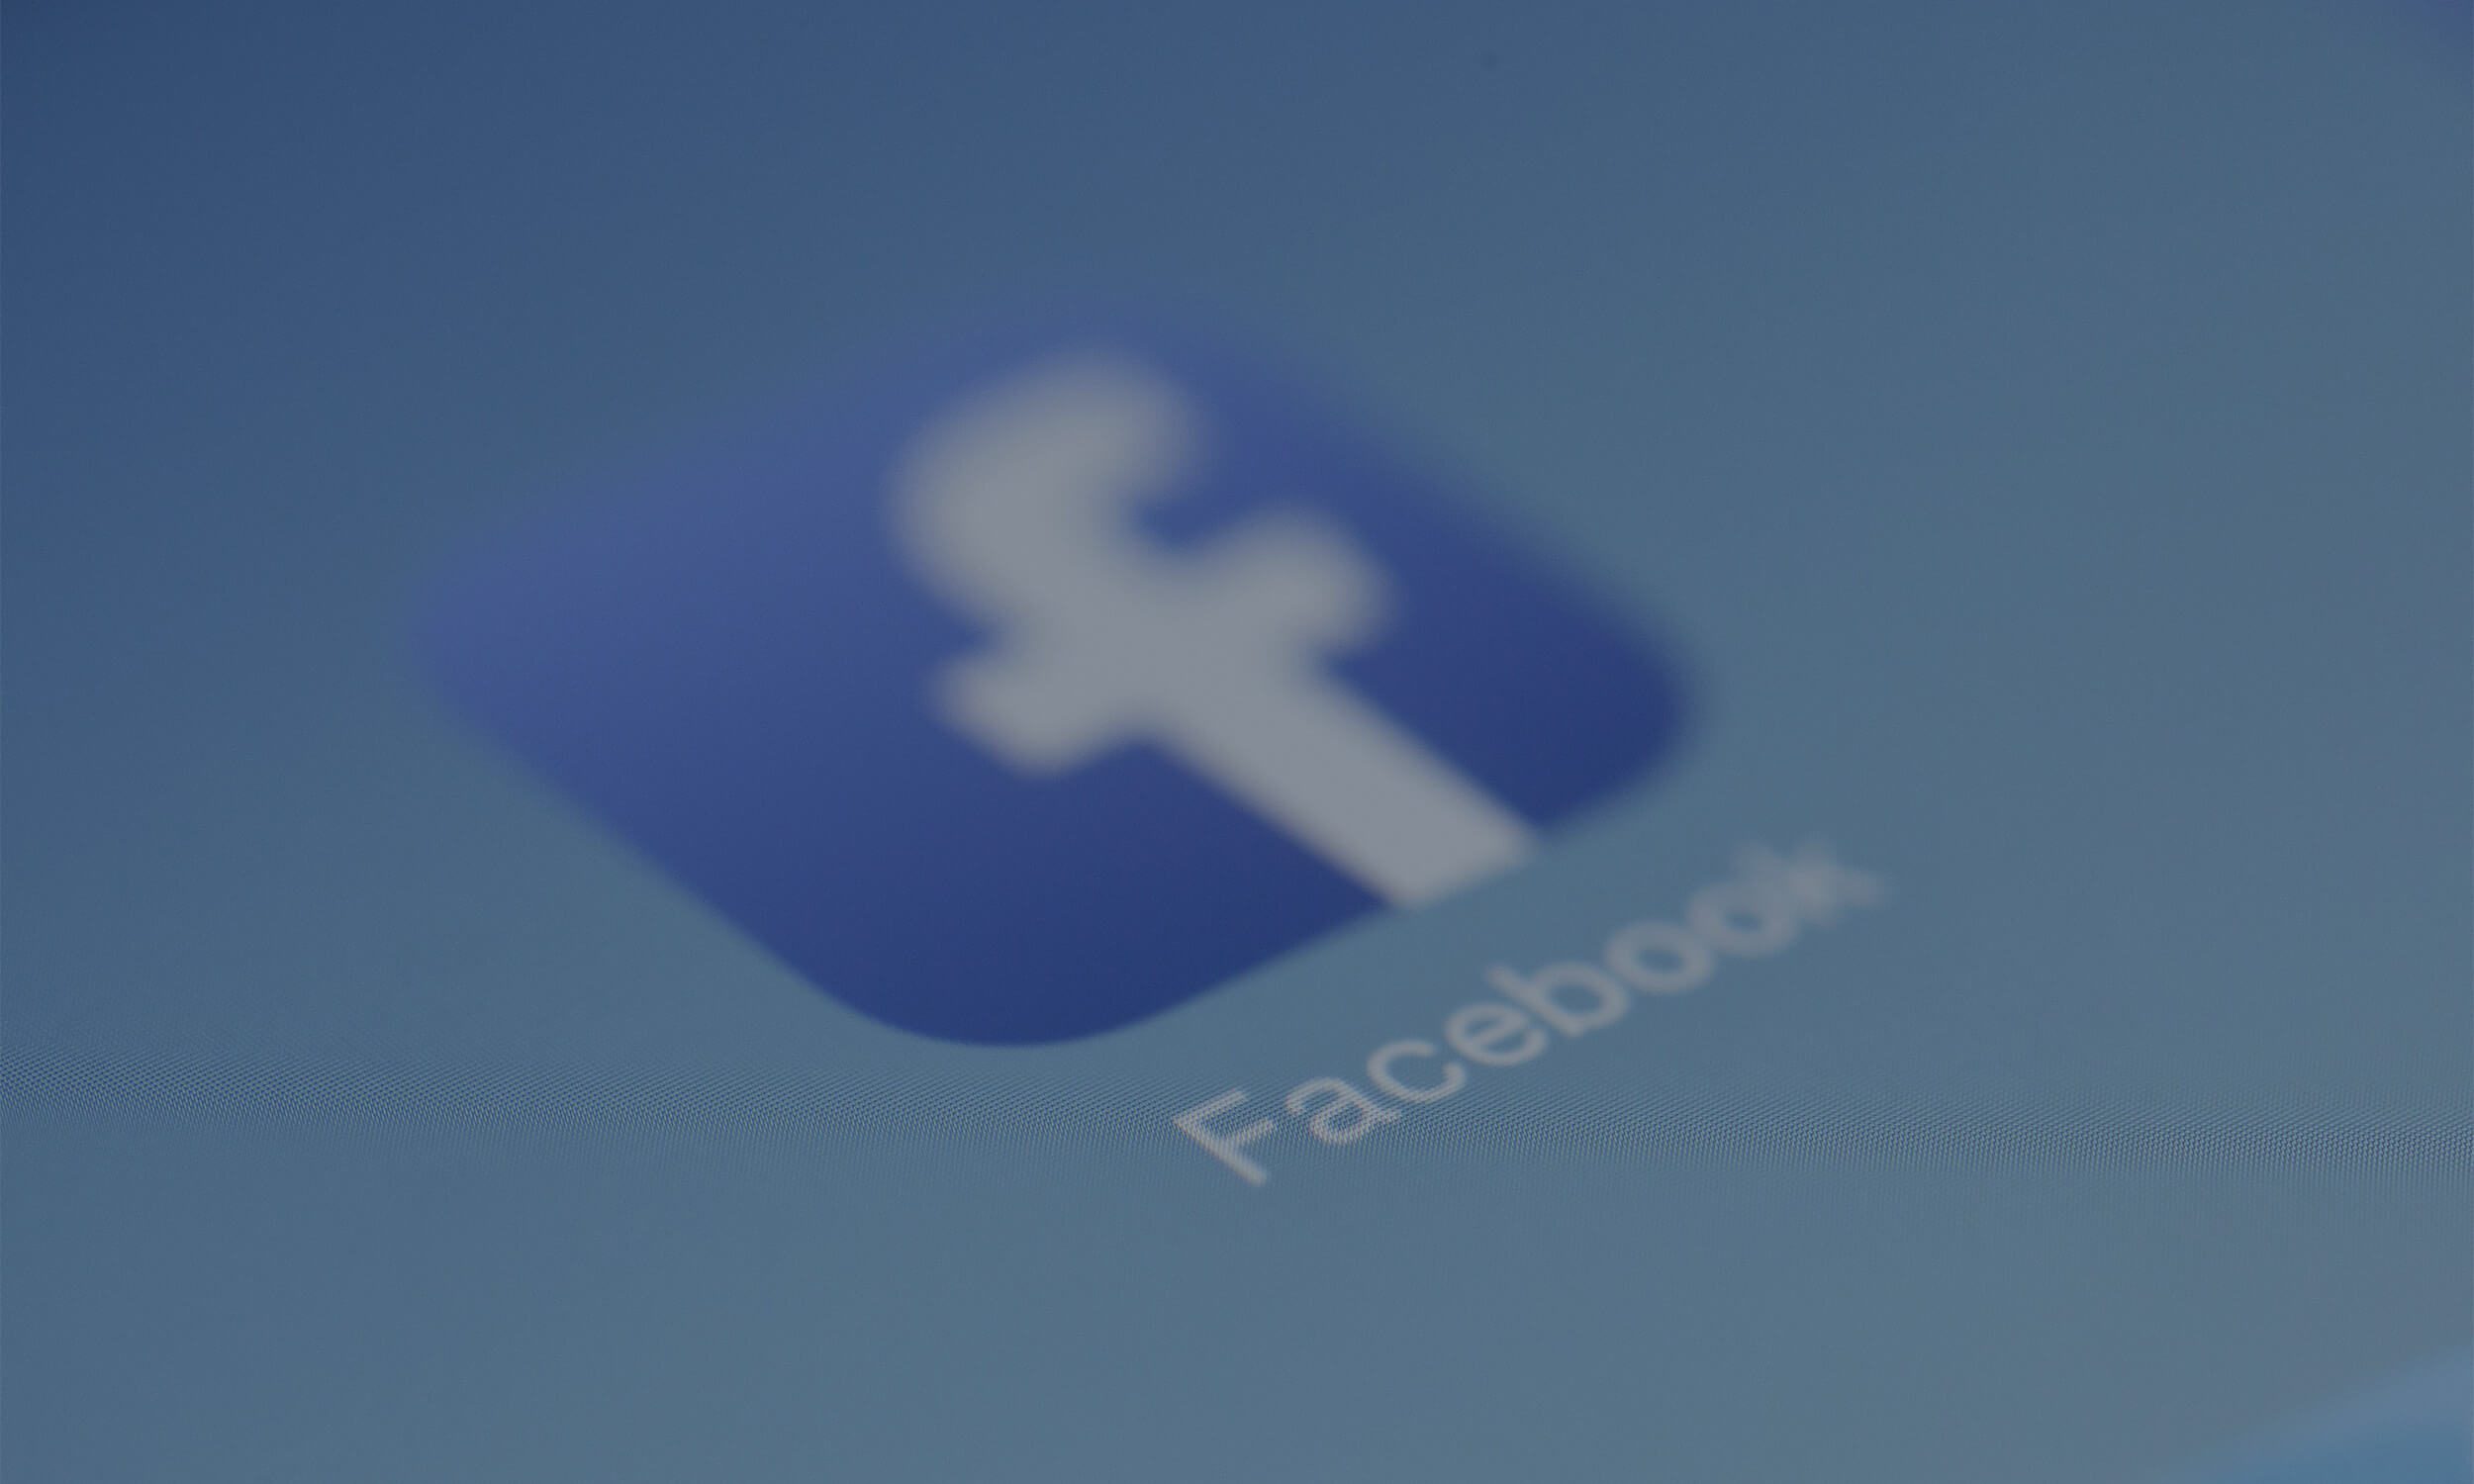 facebook logo on iphone